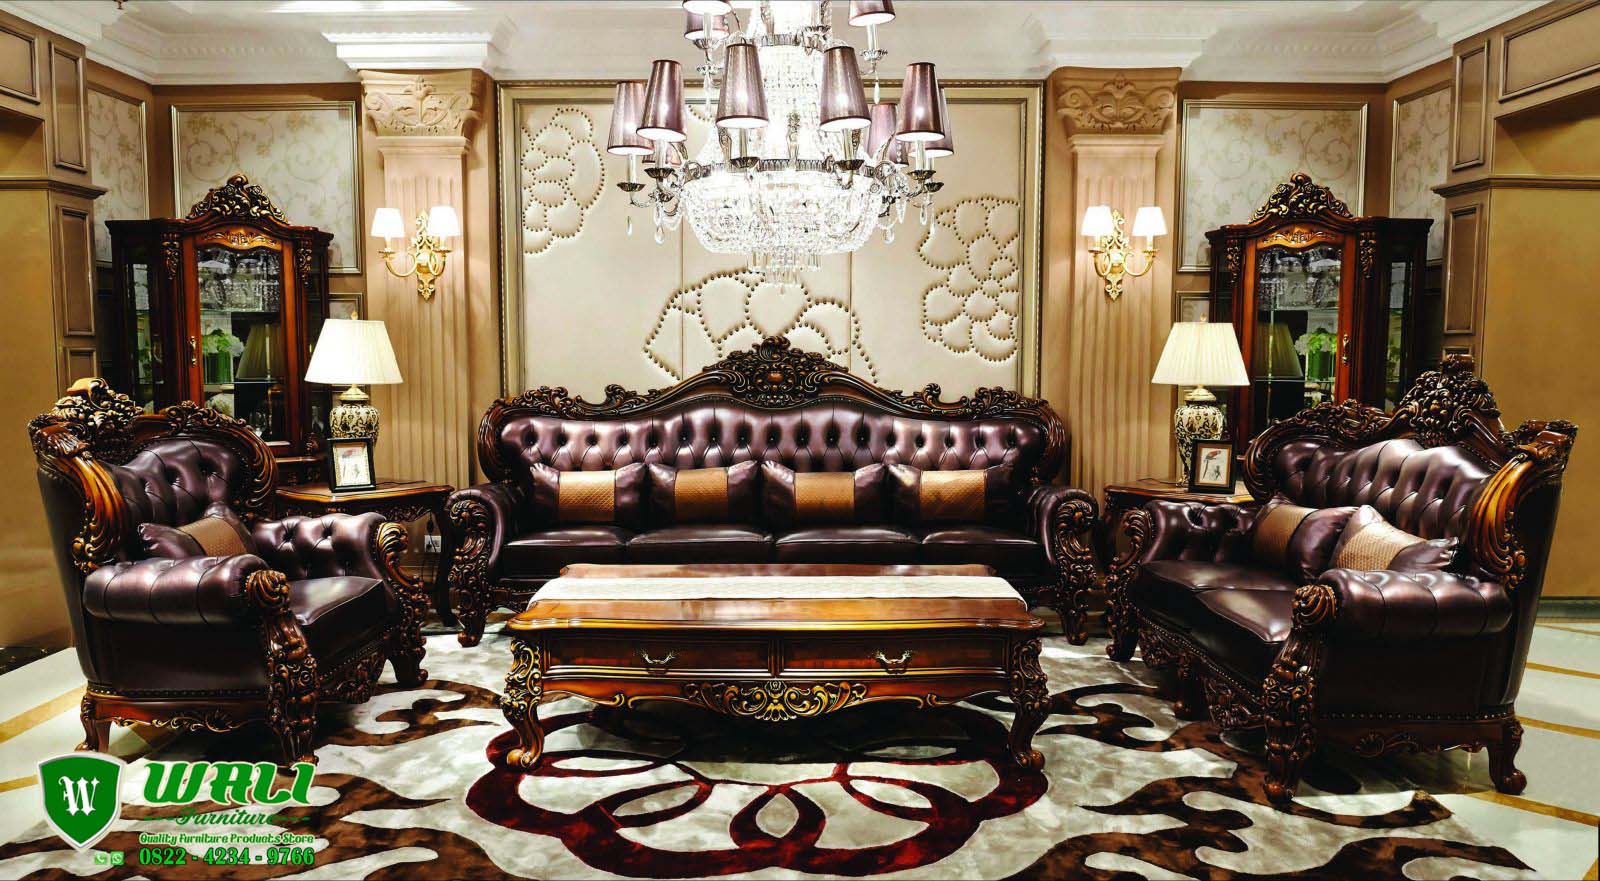 wallpaper warna coklat,furniture,living room,room,interior design,classic